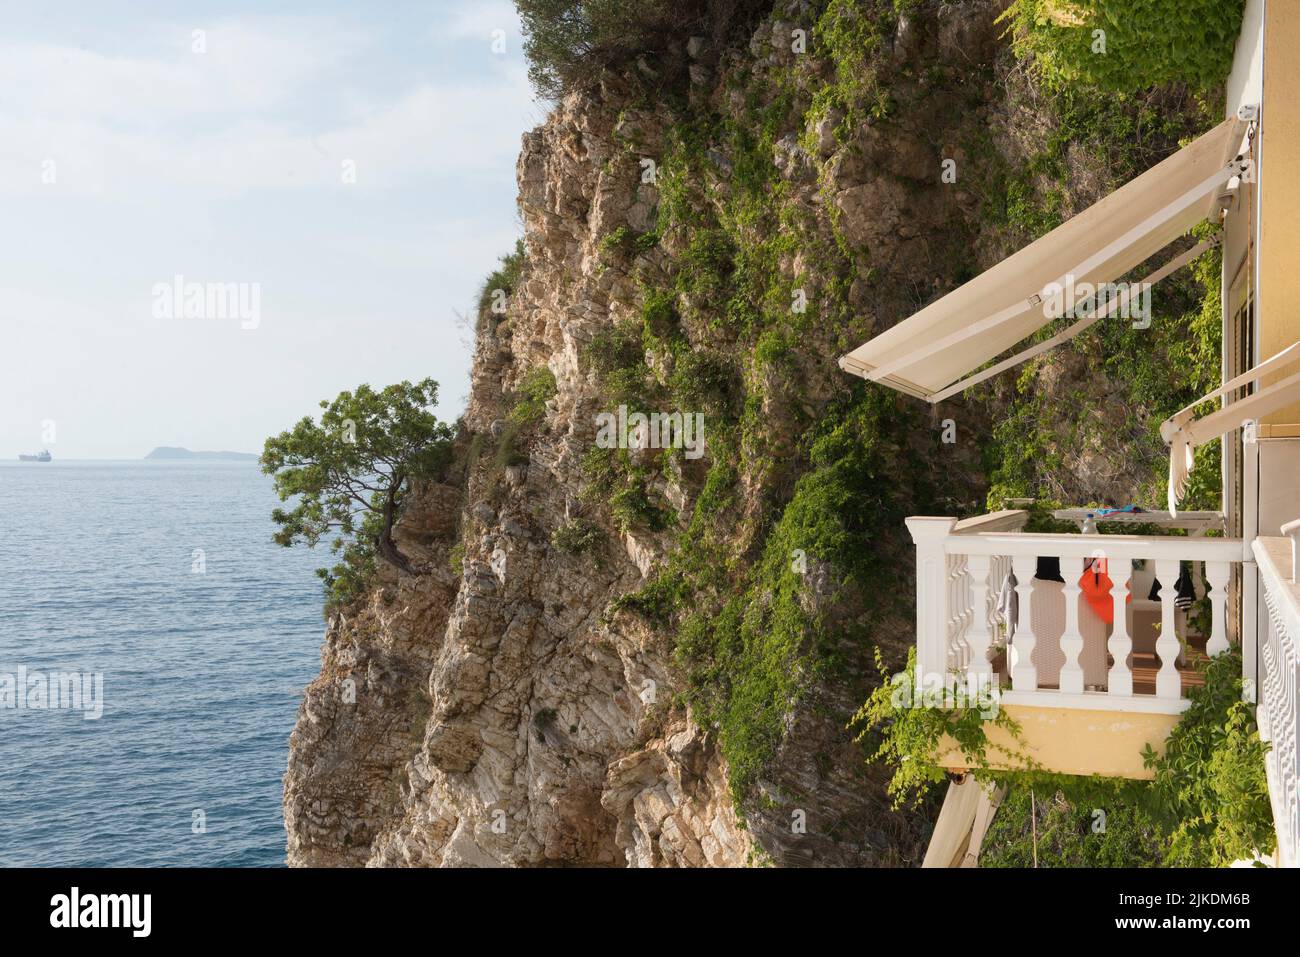 Liro Hotel backed by the cliff, Vlore, seaside resort on the Adriatic Sea, Albania, Southeastern Europe. Stock Photo